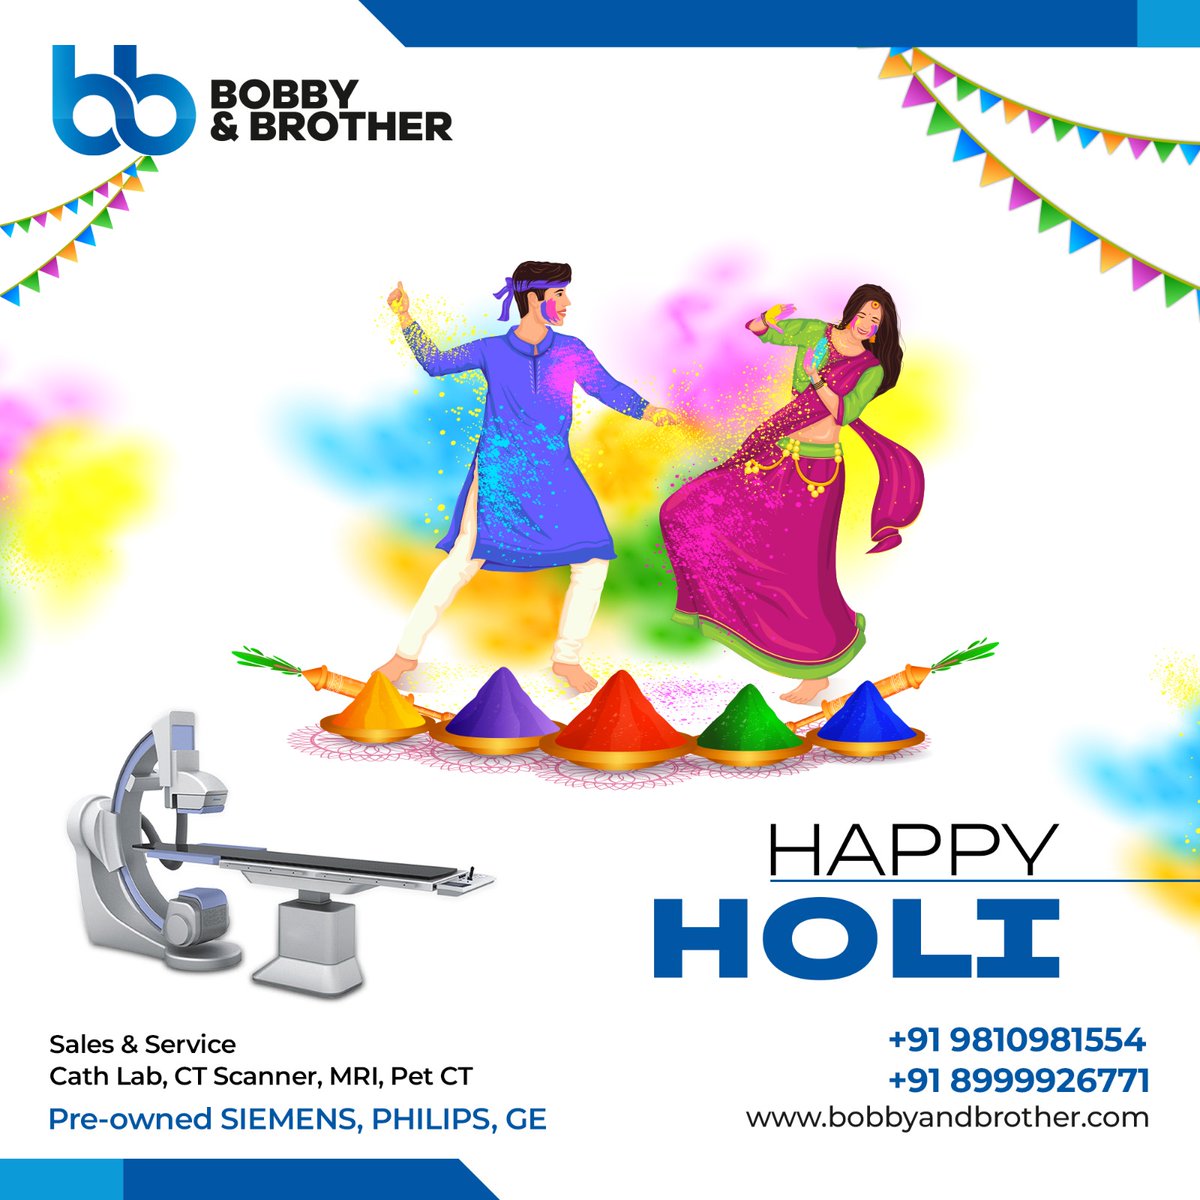 May this festival bring happiness, prosperity, and good health to your life.
We wish you all a very happy and safe Holi!!

#HappyHoli #FestivalOfColors  #HoliGreetings #RangBarse #Holi2024 #HoliFestivities #HoliCelebration #BobbyAndBrother #MedicalHealthEquipment #India